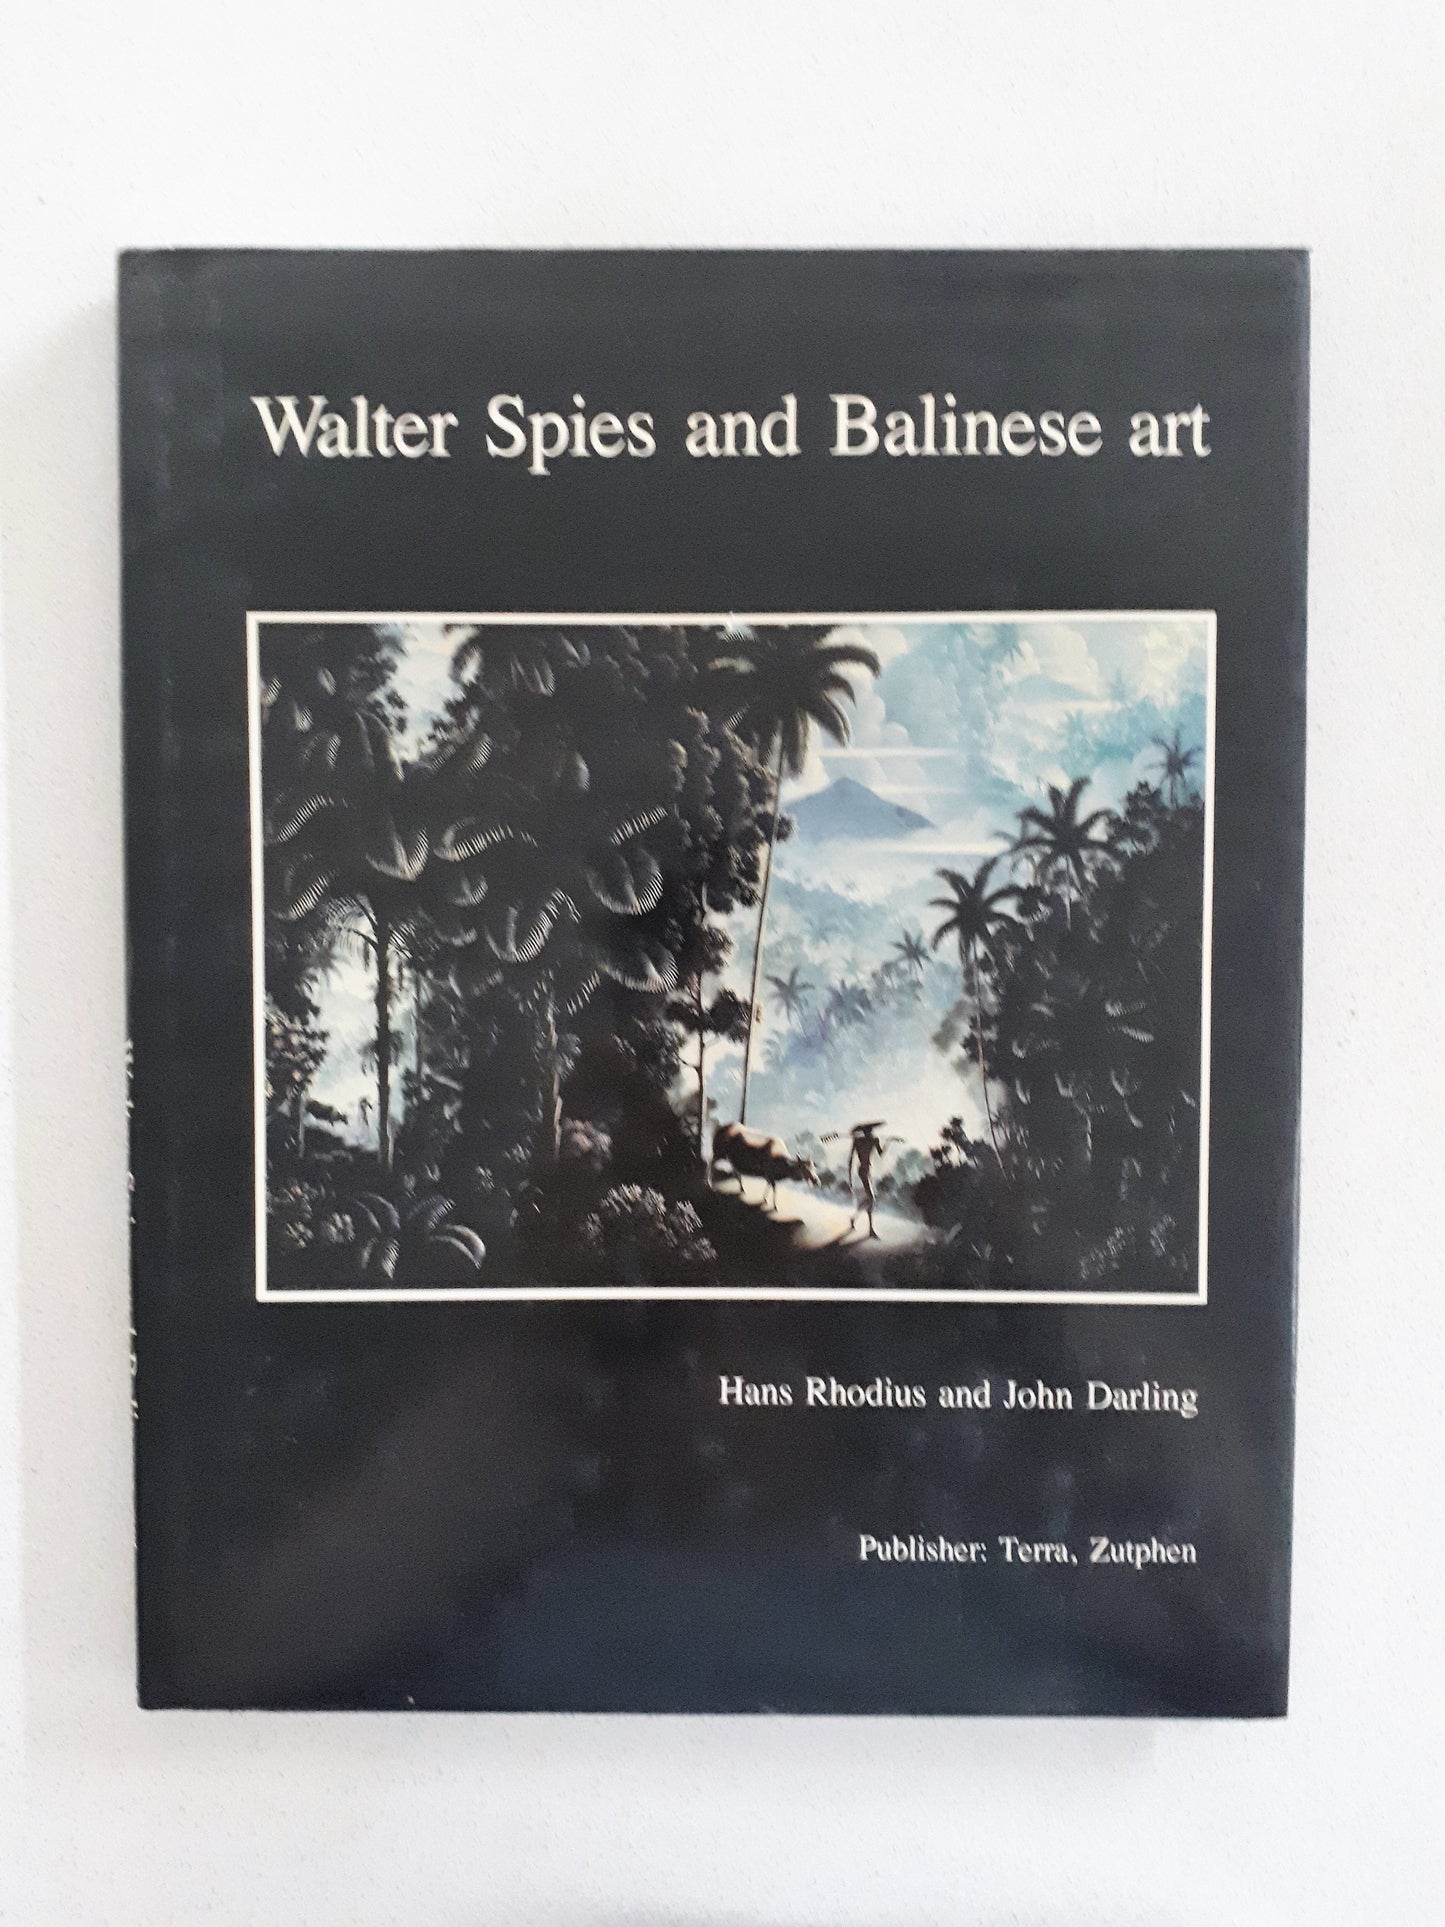 Walter Spies and Balinese Art by Hans Rhodius and John Darling